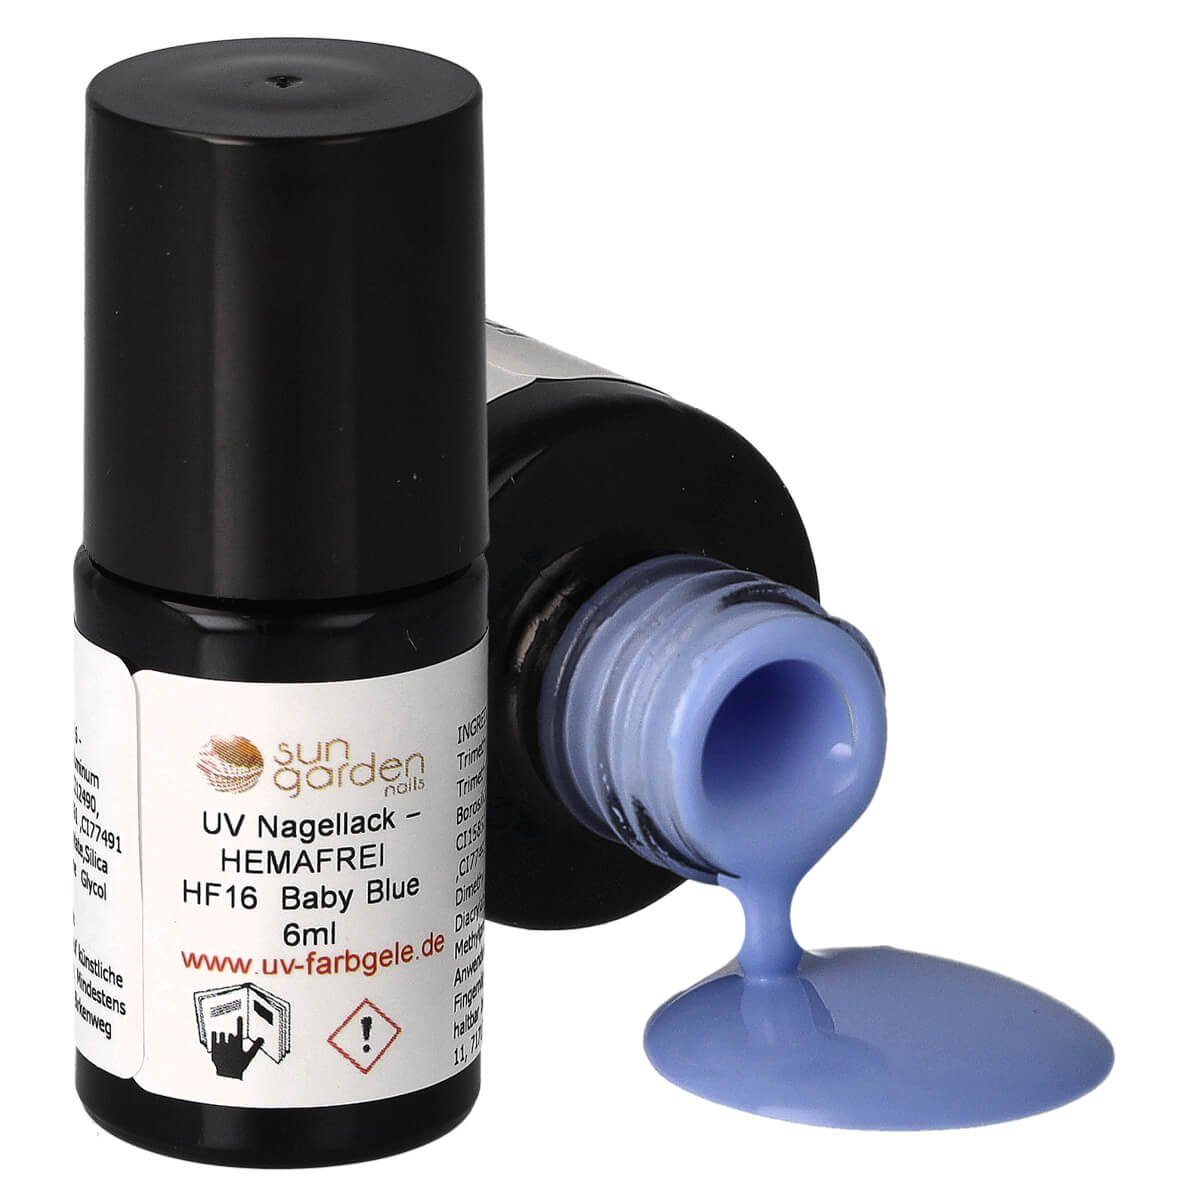 Sun Garden Nails Nagellack HF16 Baby Blue - UV Nagellack 6ml – HEMAFREI | Nagellacke